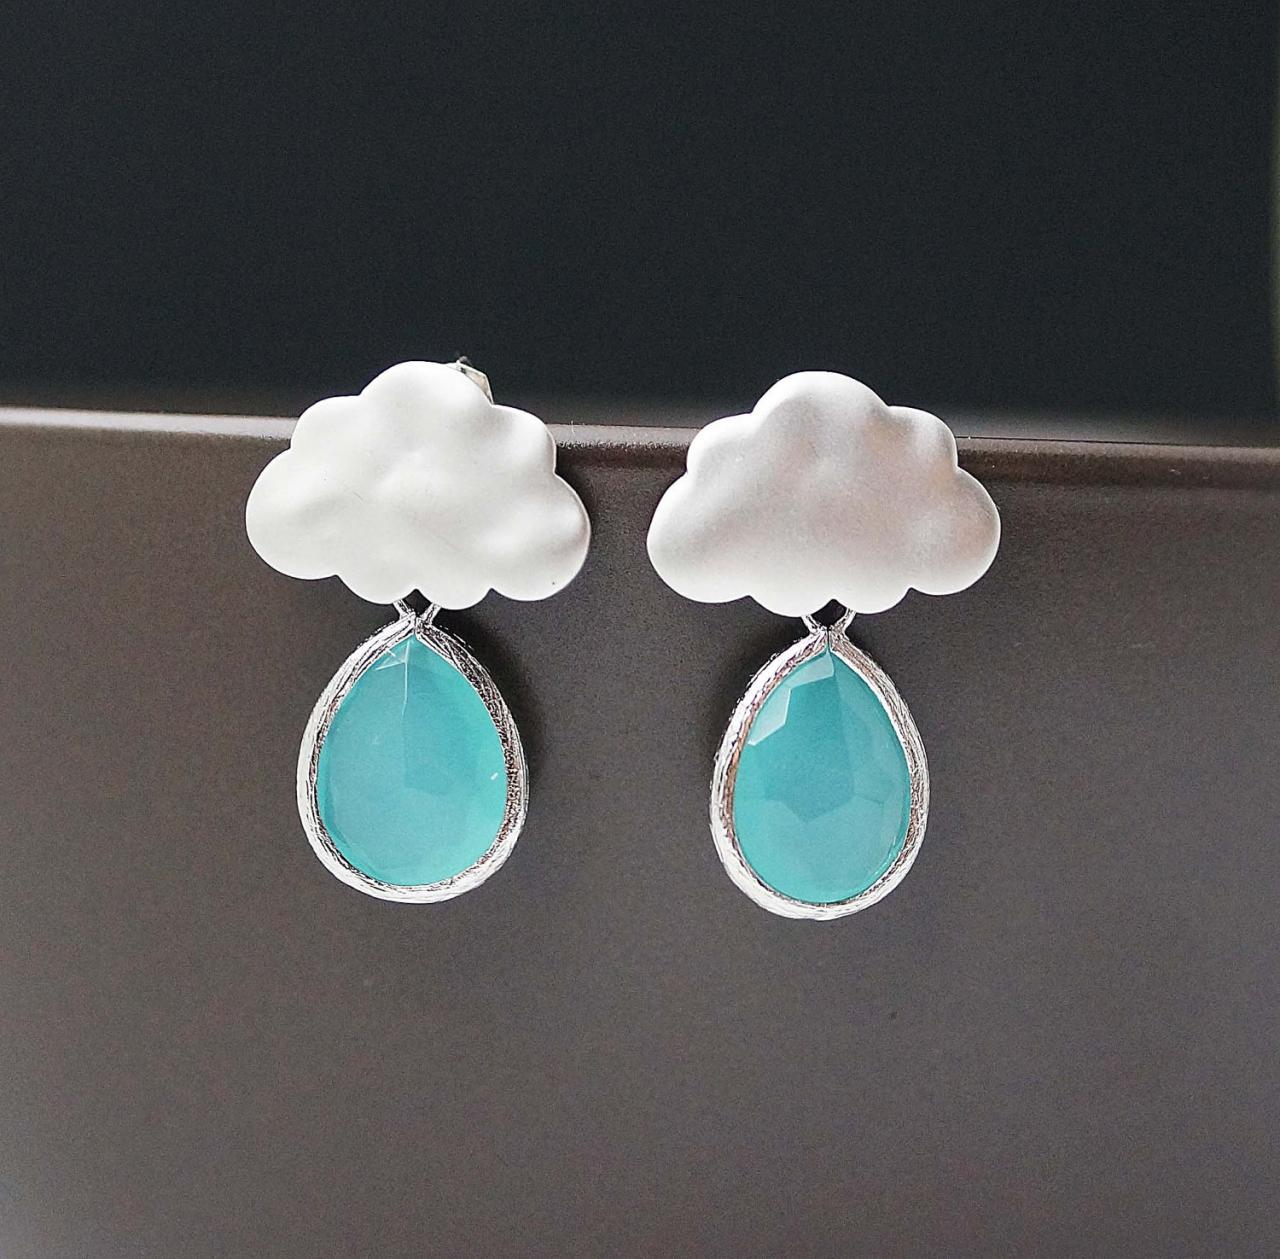 Rain Drops And Cloud Earrings - Matte Silver Finish Rain Cloud Ear Posts And Sea Foam Mint Opal Glass Tear Drops . For Her. Gift For Her